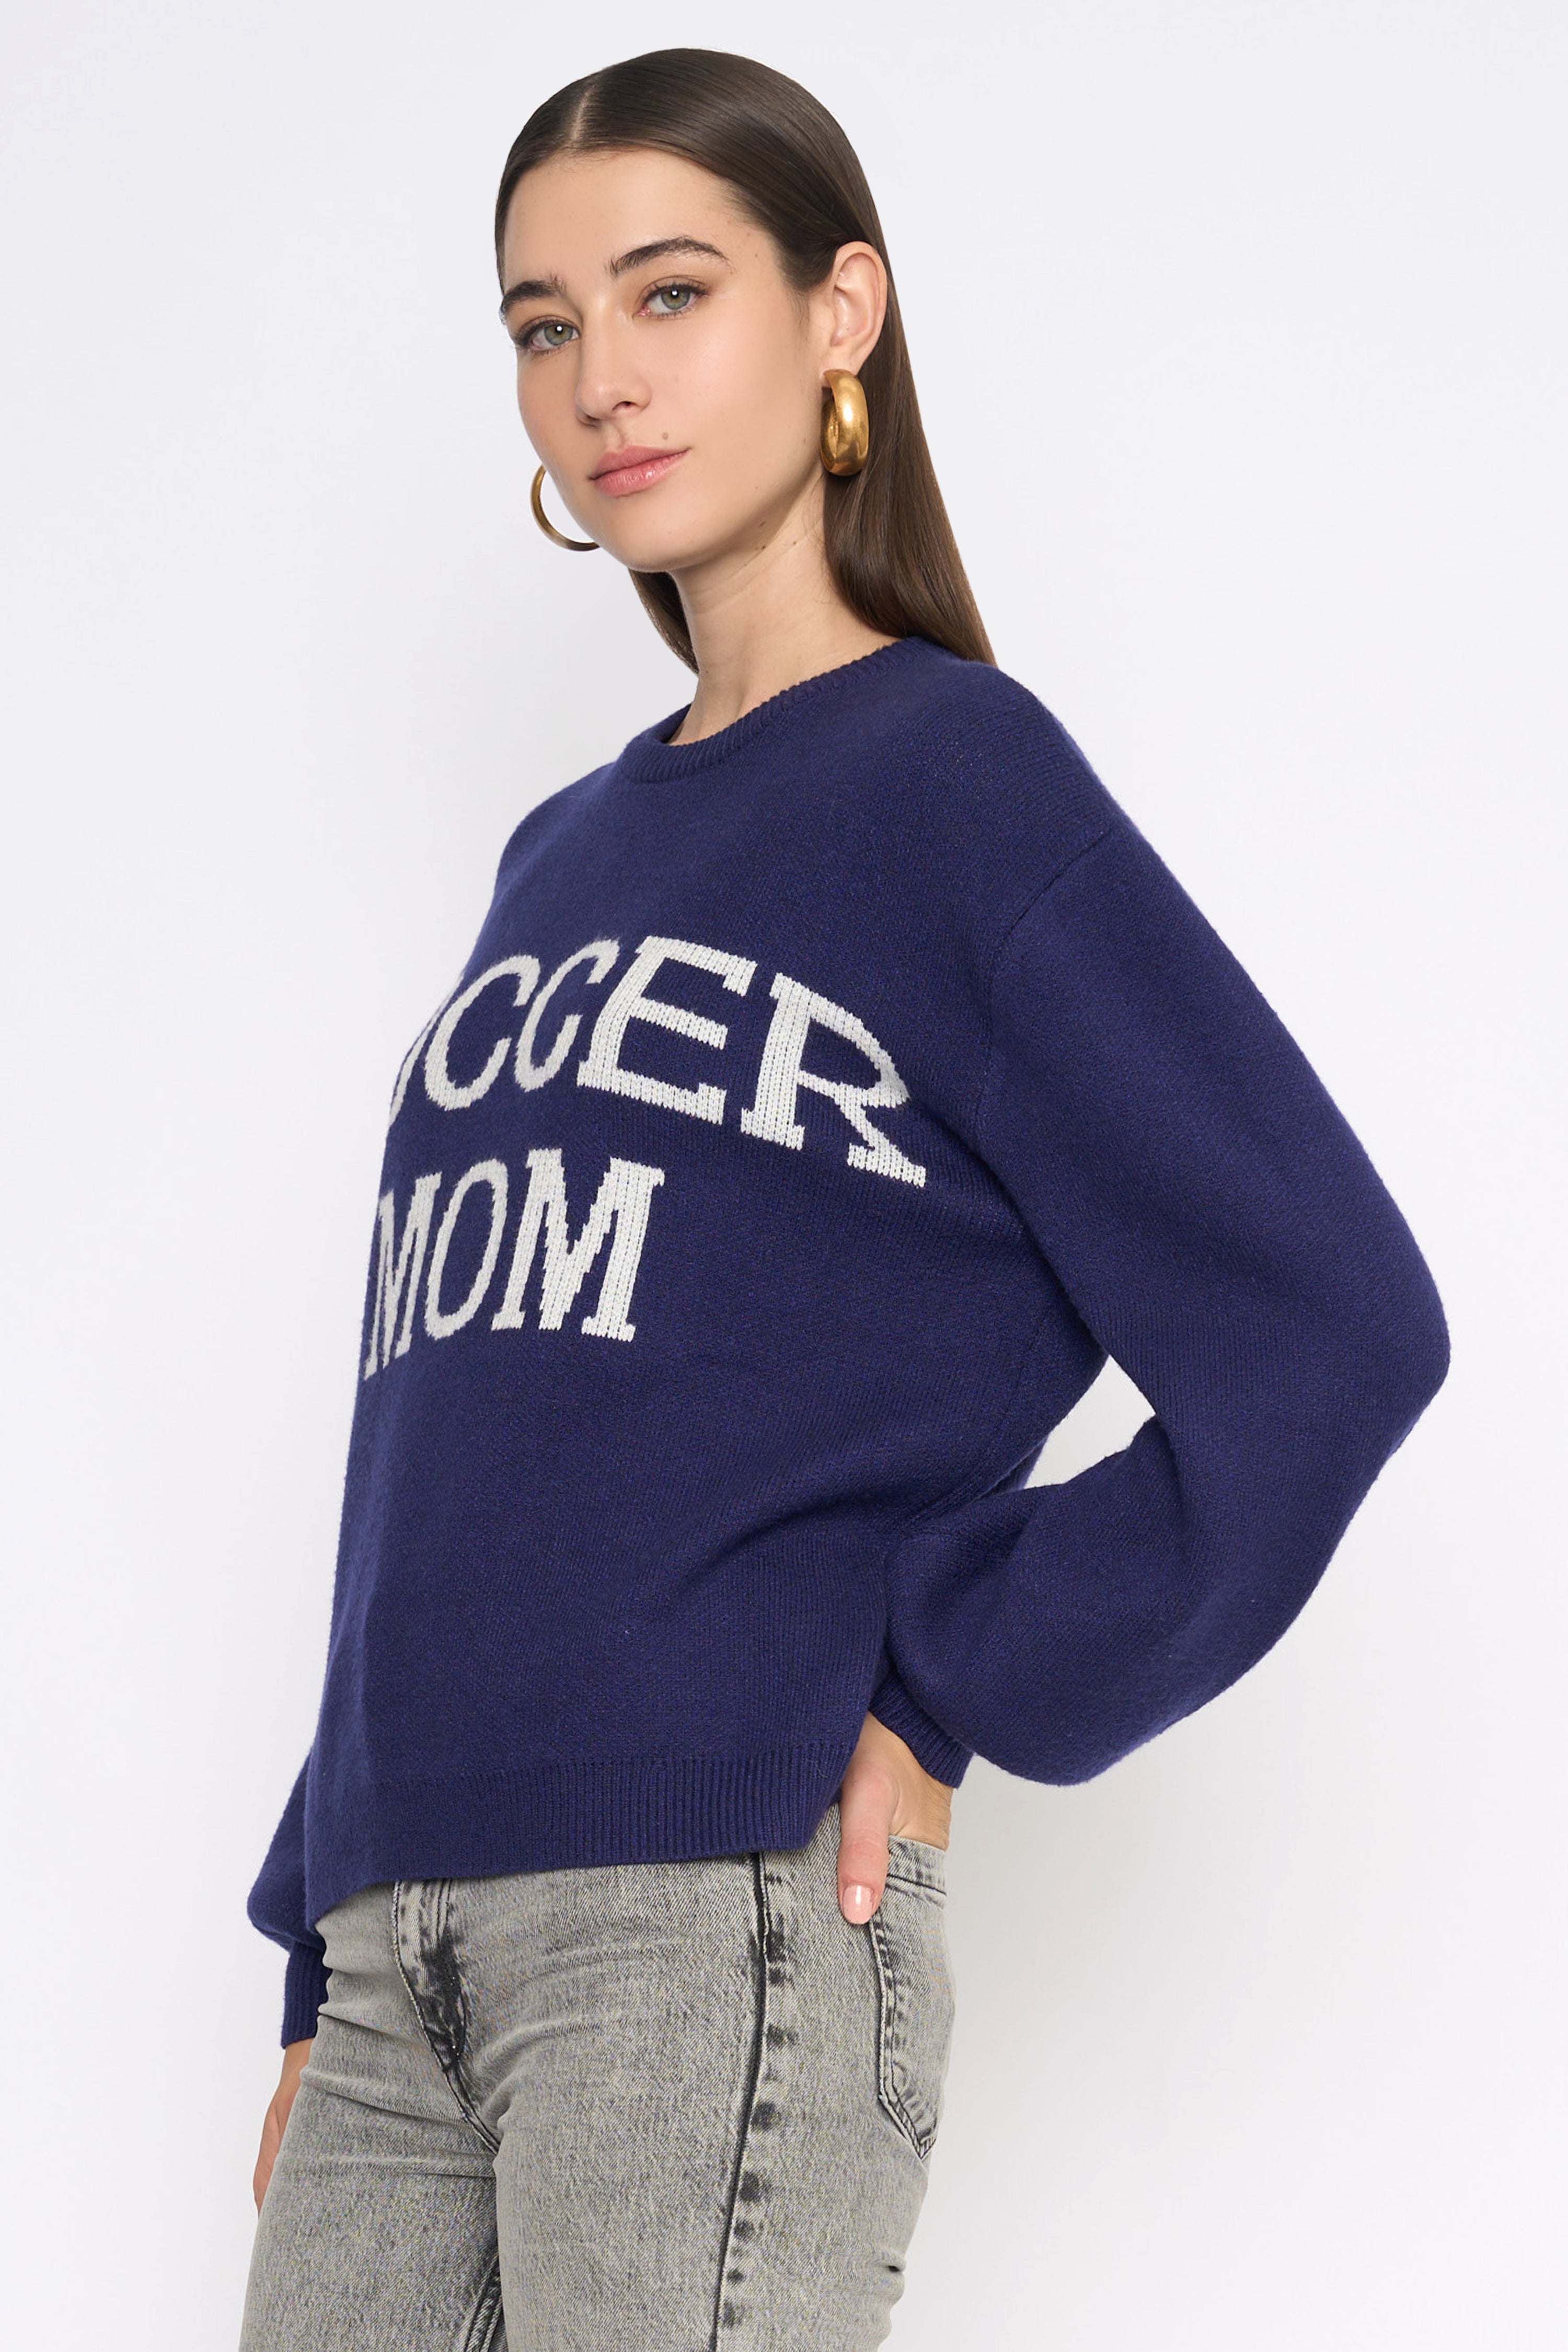 Soccer Mom Sweater